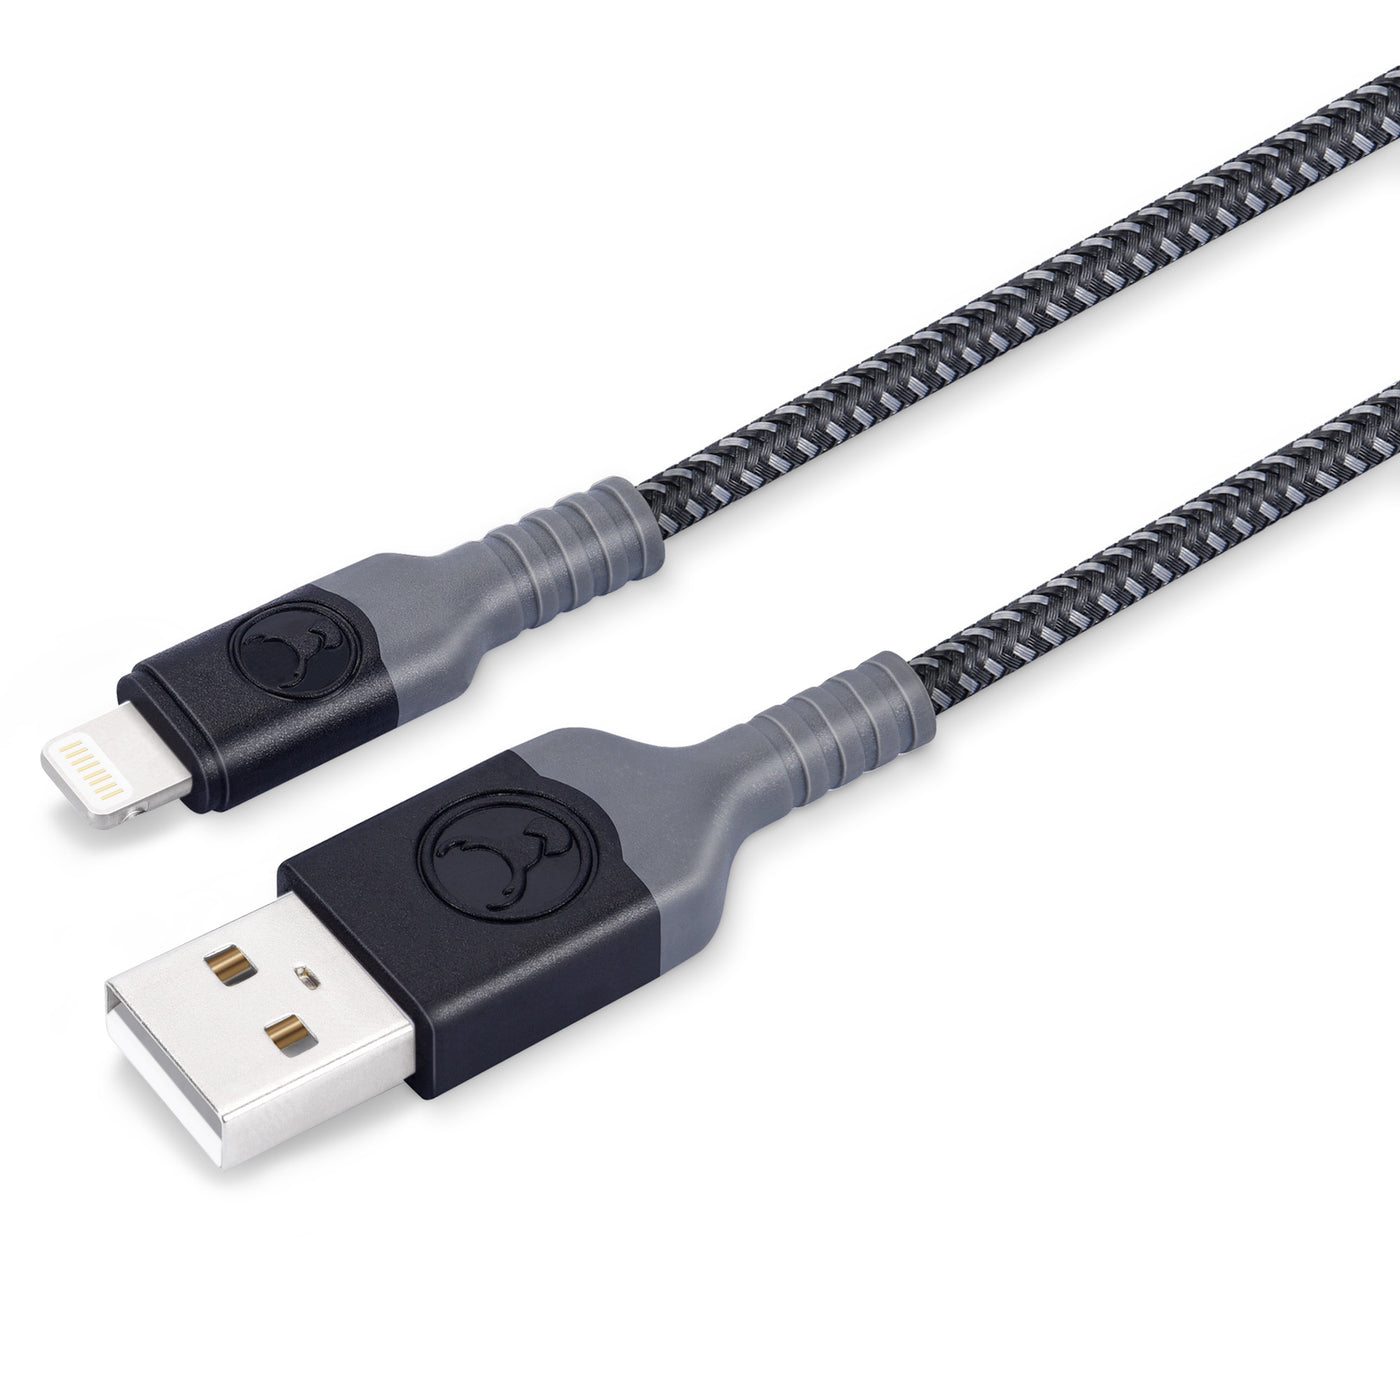 Bonelk USB to Lightning Cable, Long-Life Series (Black) - 1.2m